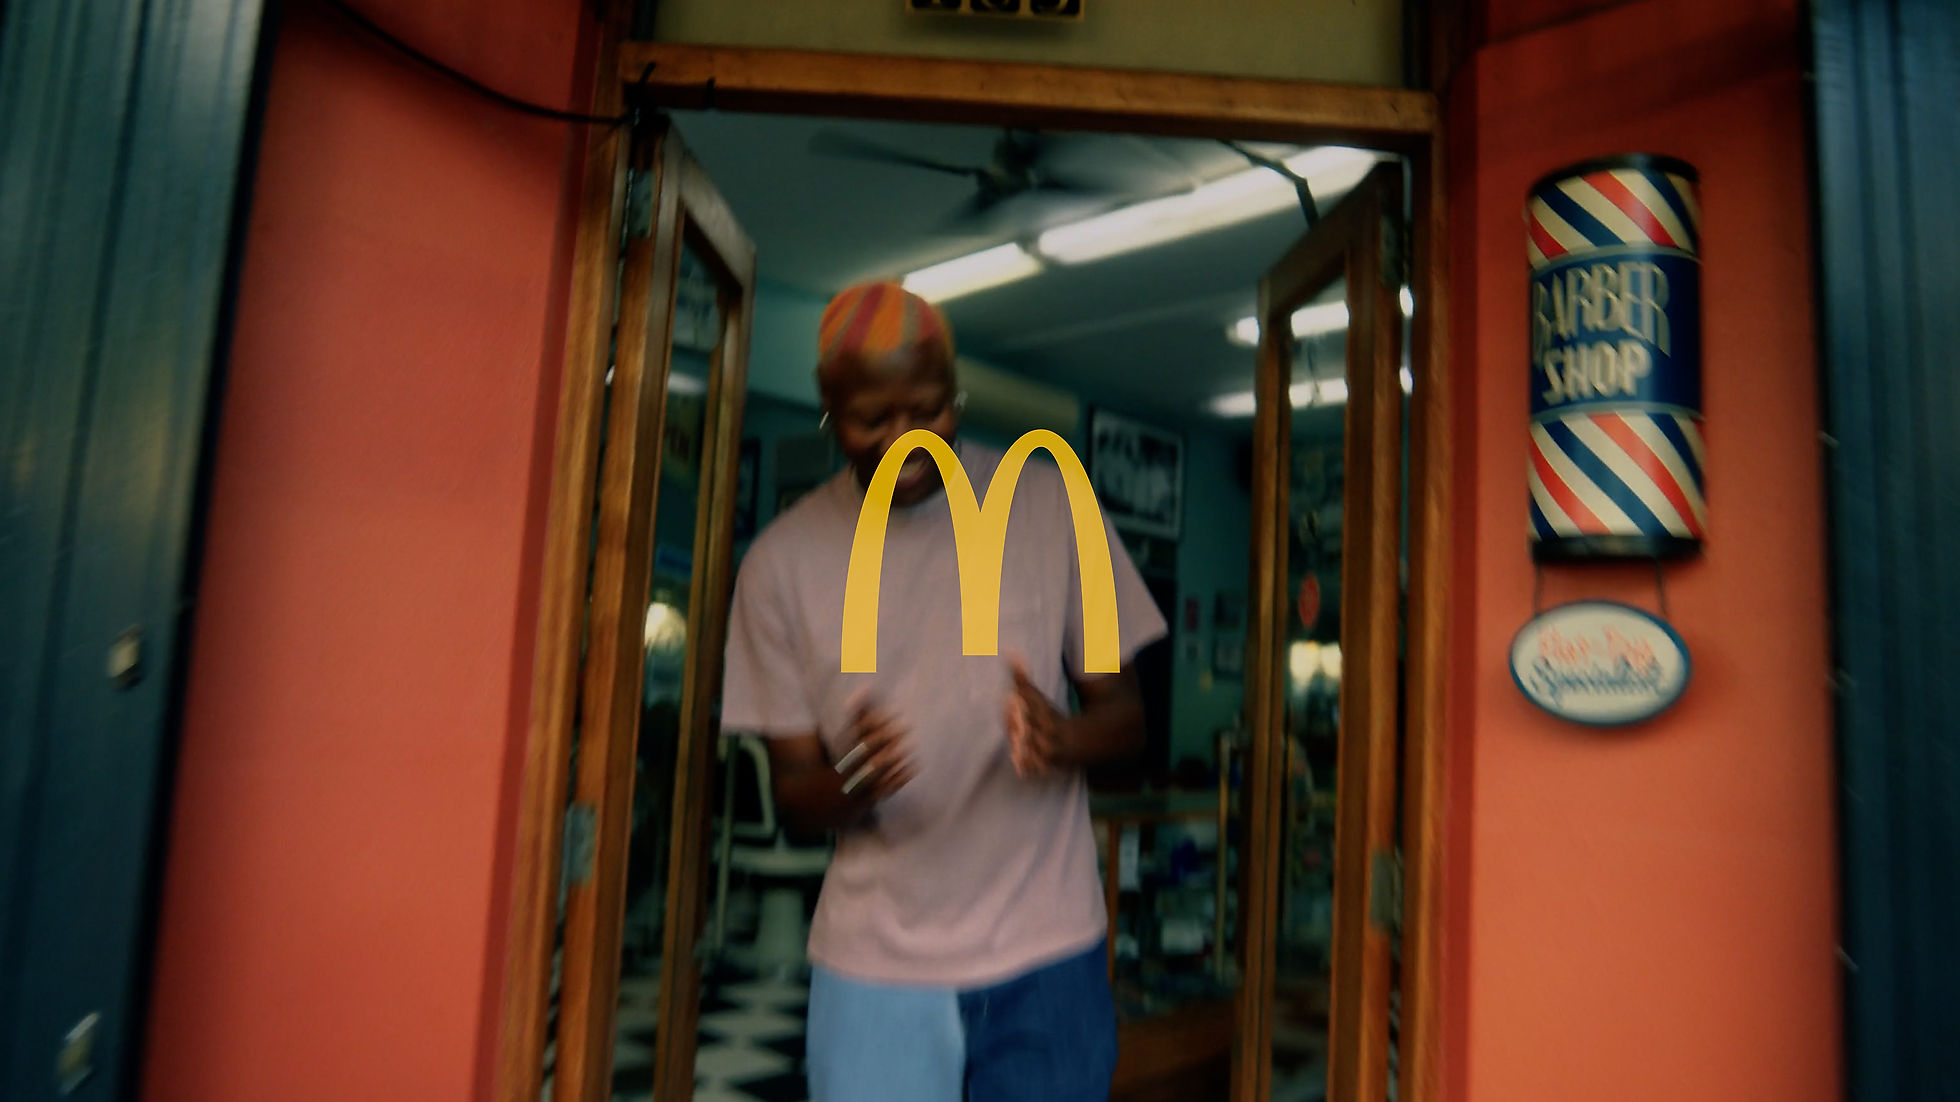 McDonald's - "Stay Flurry" (DC)